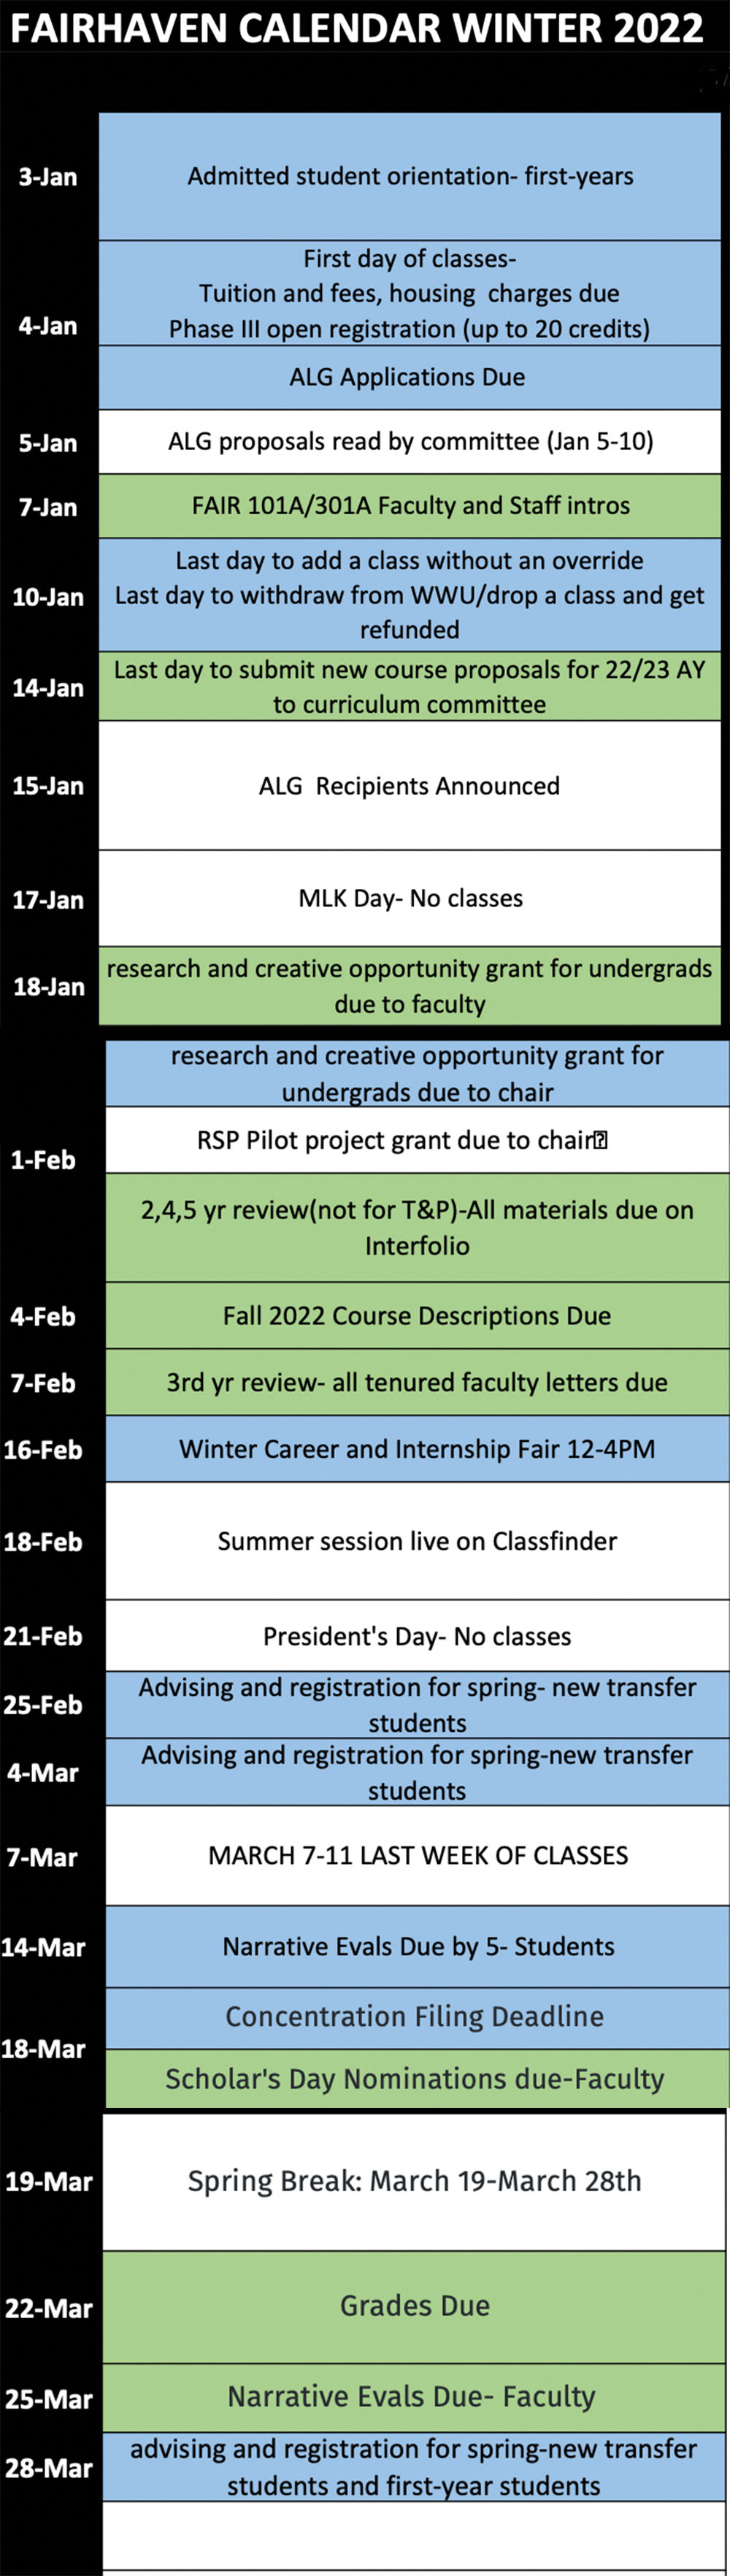 Fairhaven College Calendar Winter 2022 | Fairhaven College of